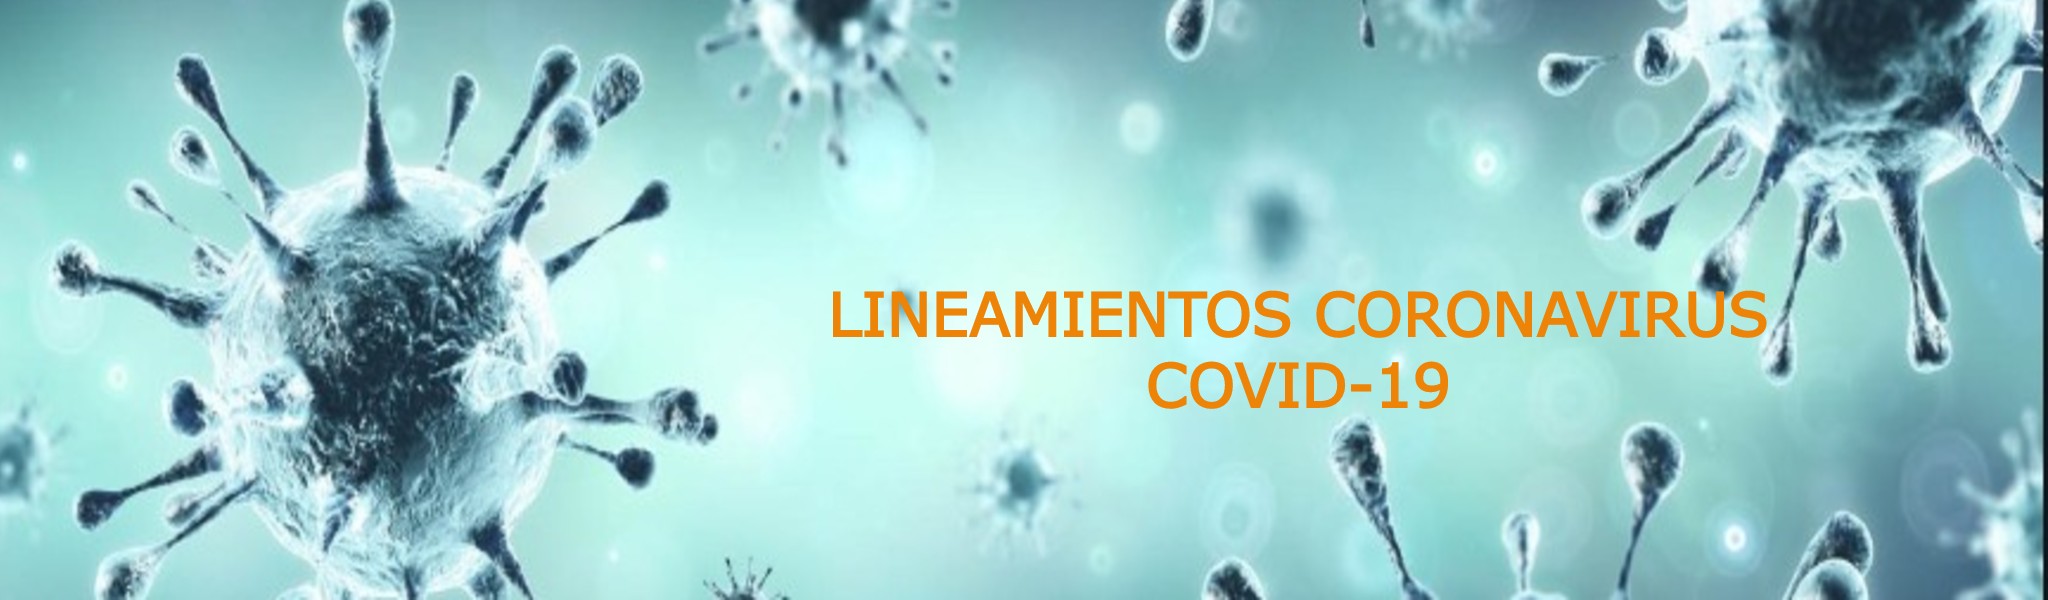 Lineamientos de Coronavirus